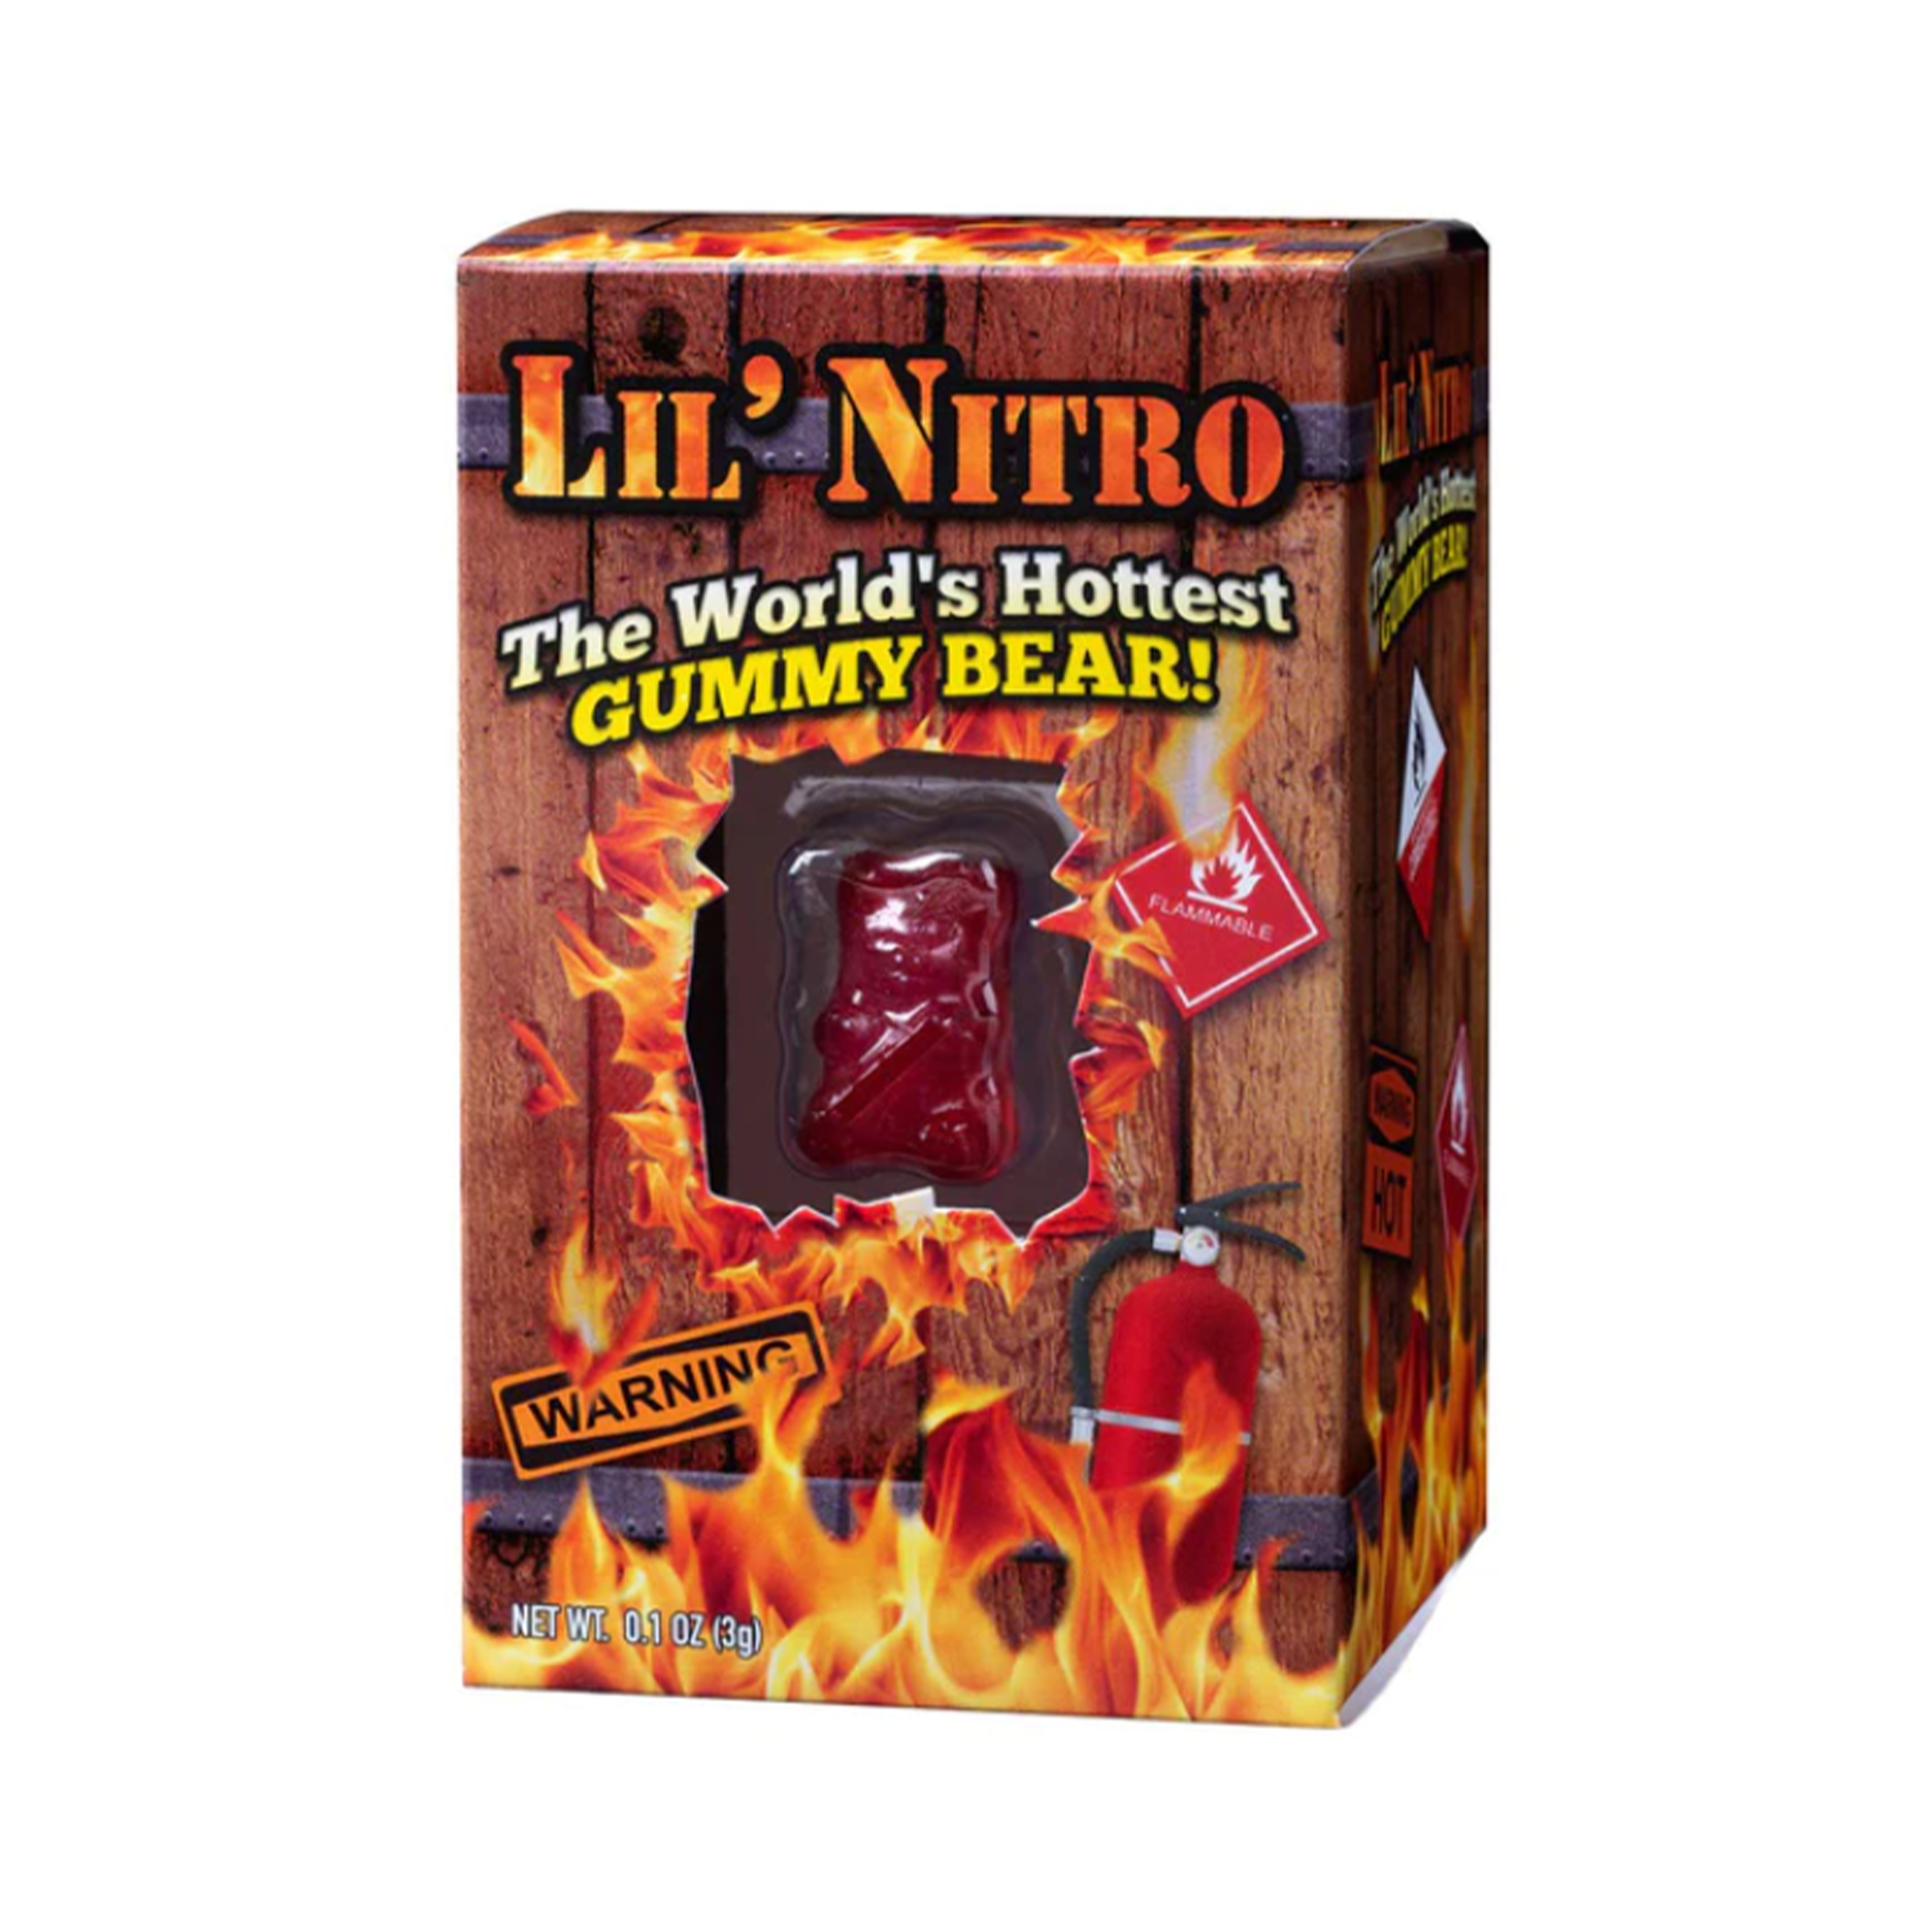 Lil Nitro "Worlds Hottest" Gummy Bear